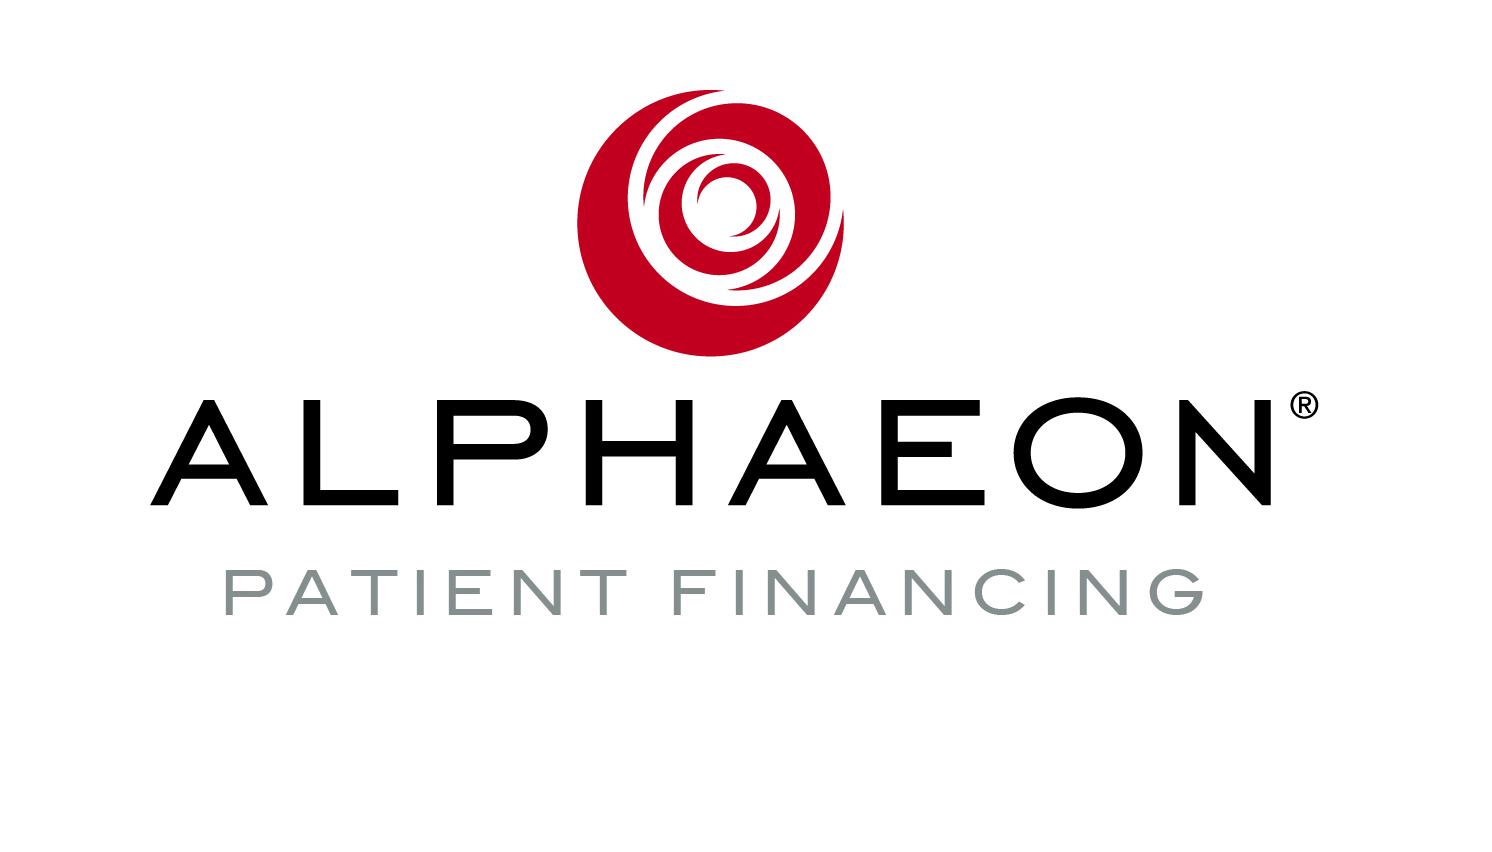 Alphaeon brand logo